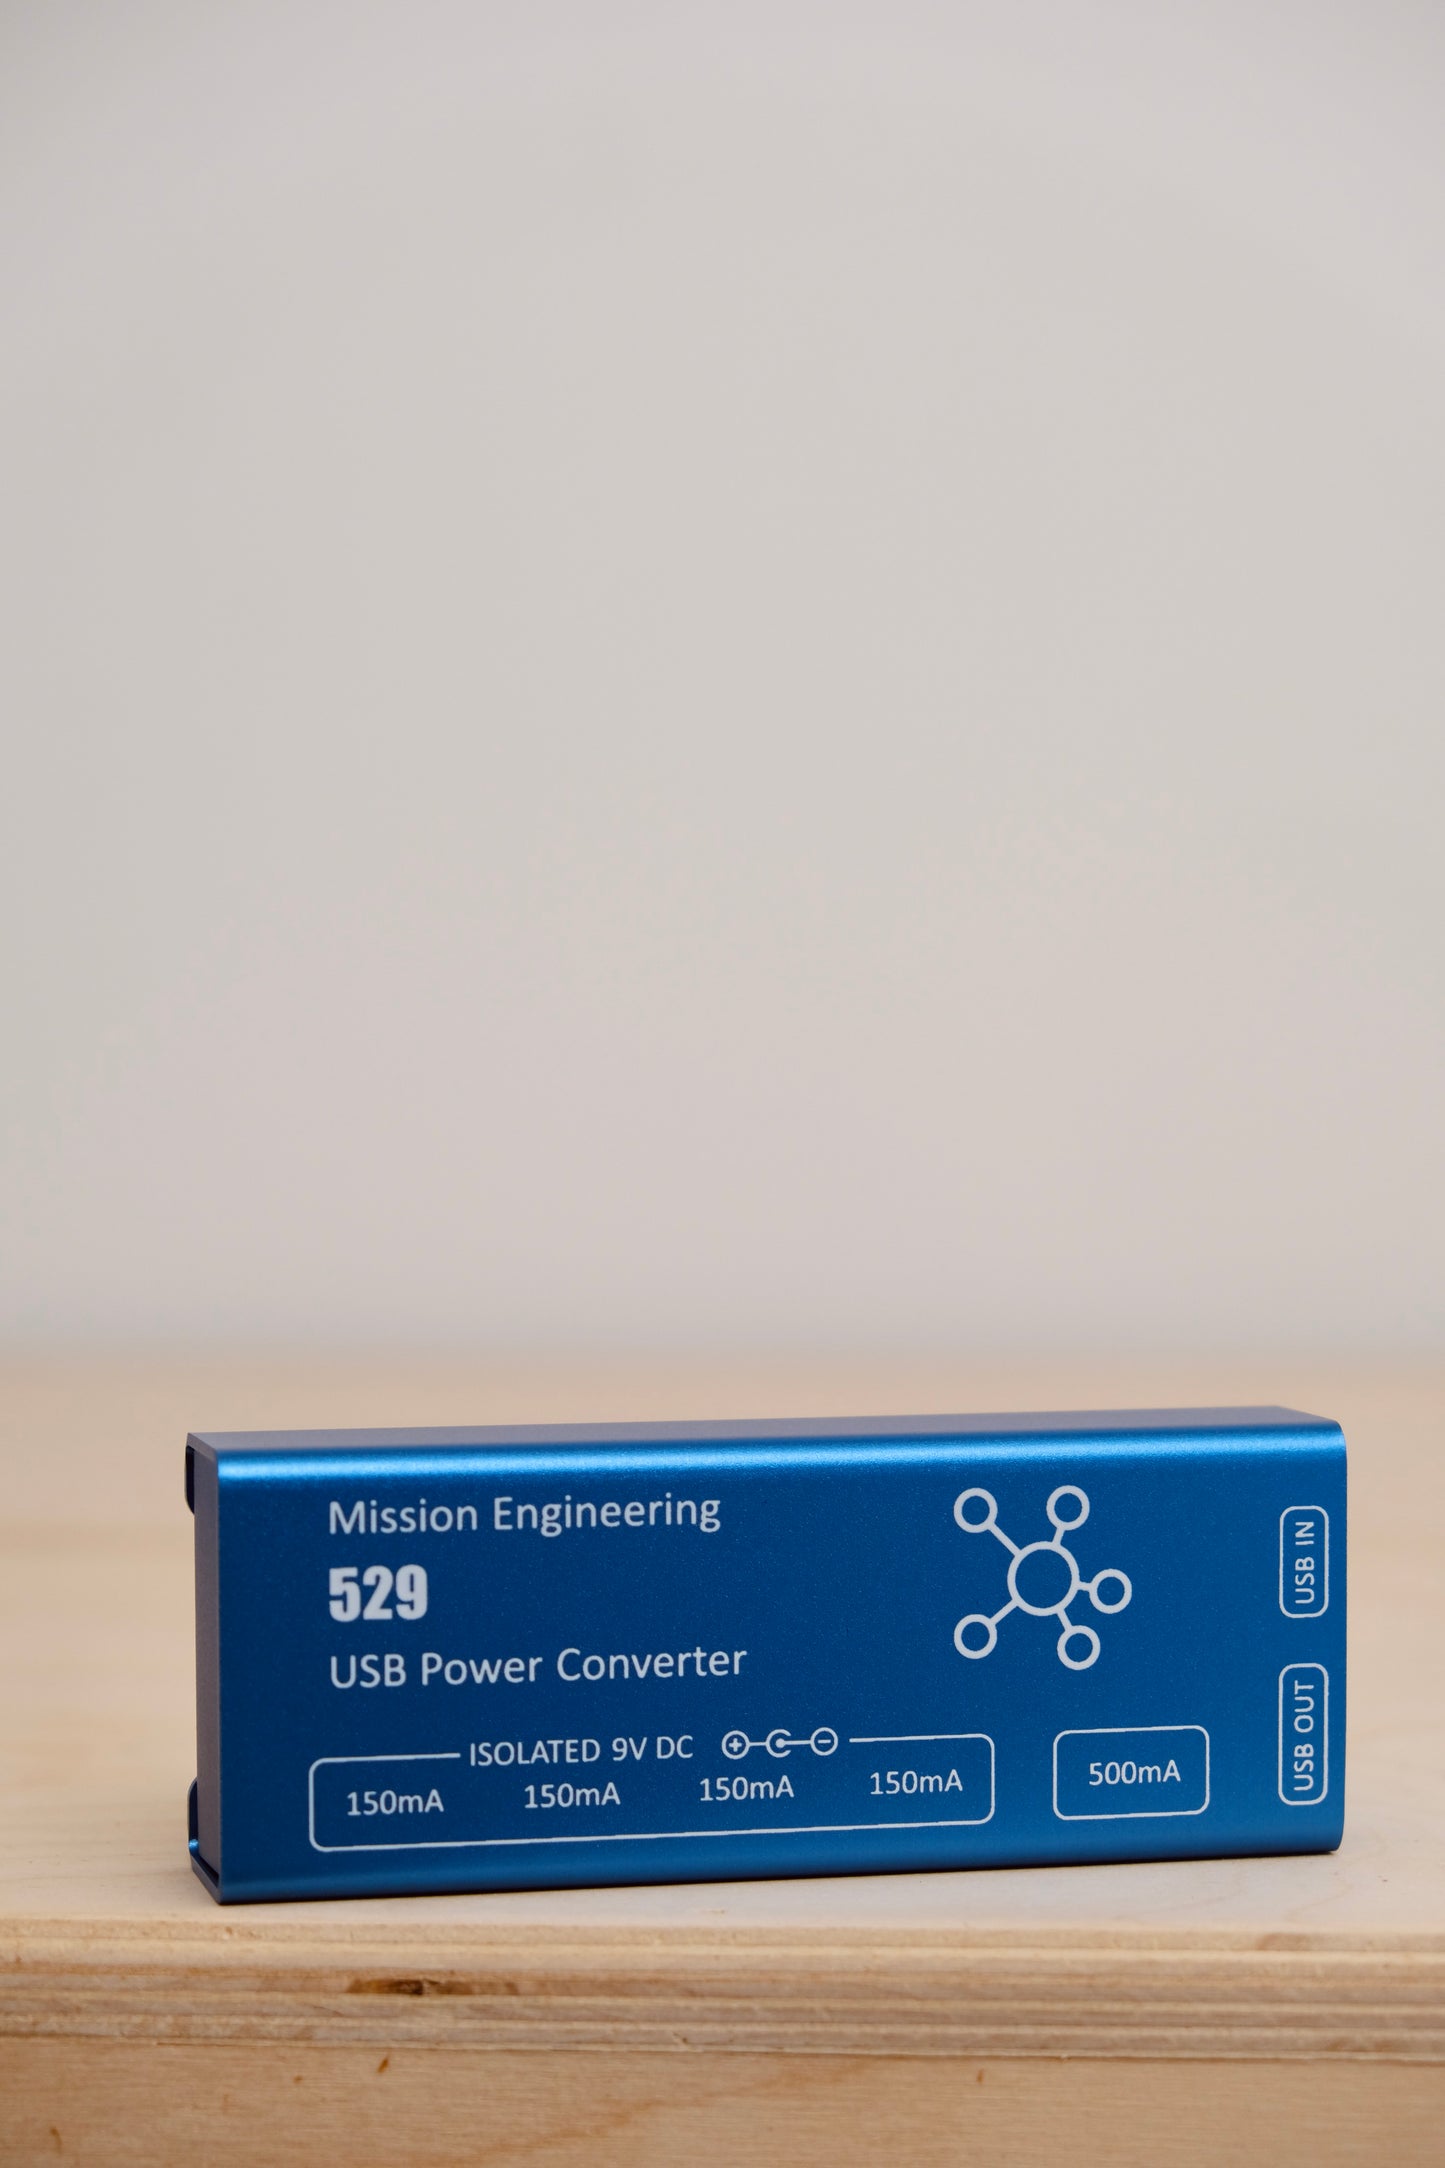 Mission Engineering 529 USB Power Converter